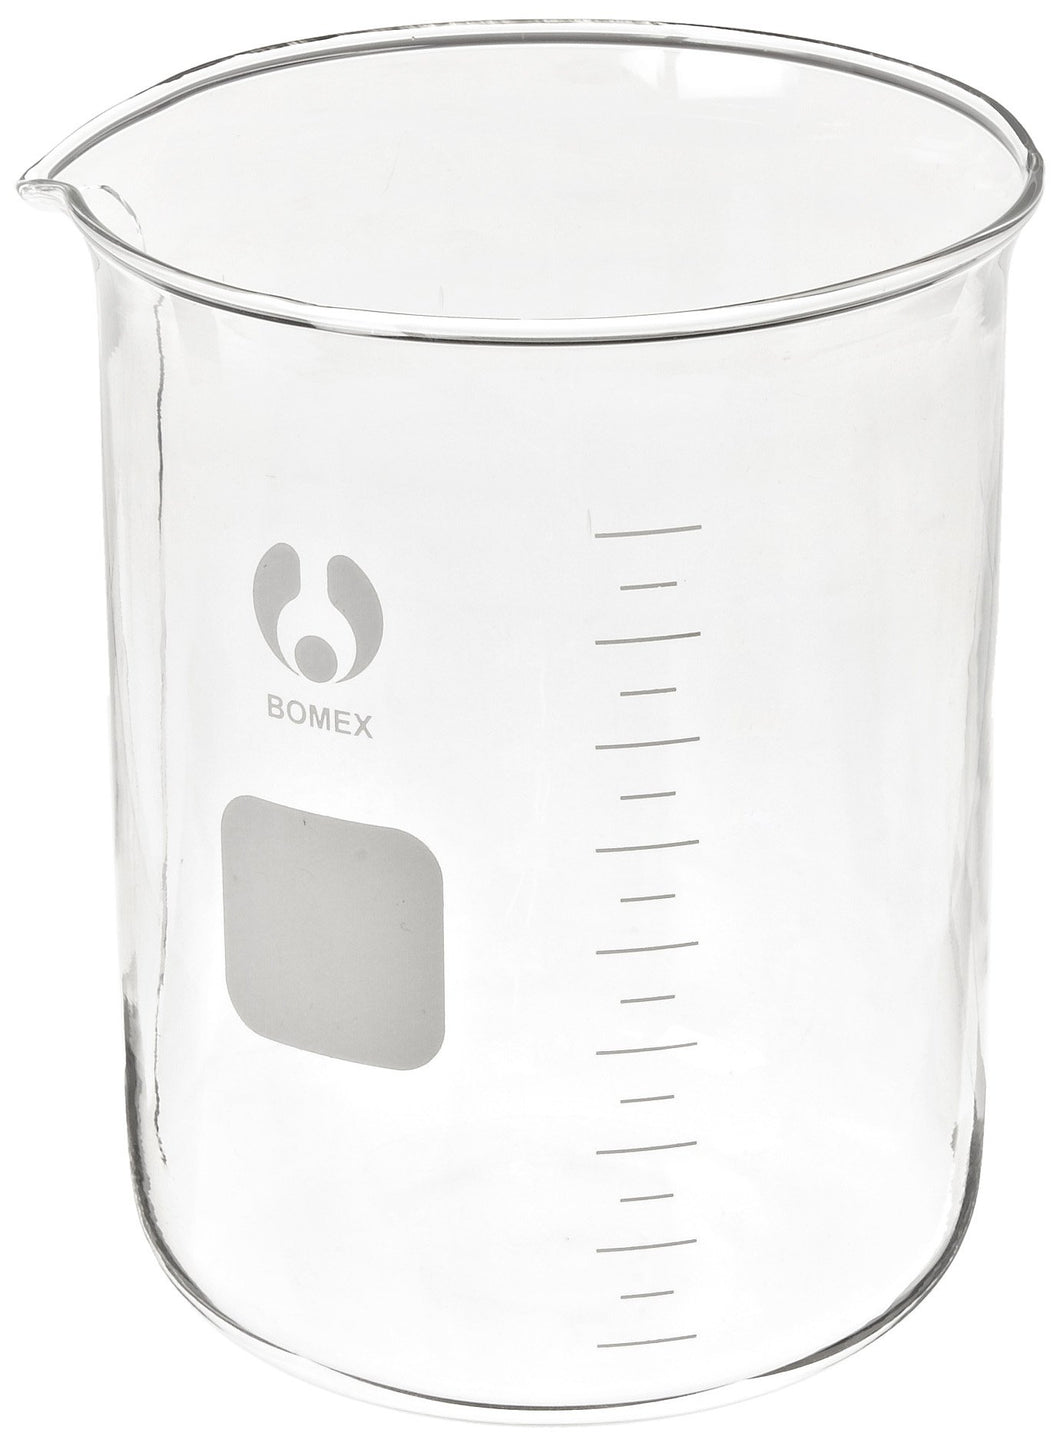 Bomex griffin beaker | Made of borosilicate glass | Graduated low form beaker | For classroom lab setups | Capacity 1000 milliliters